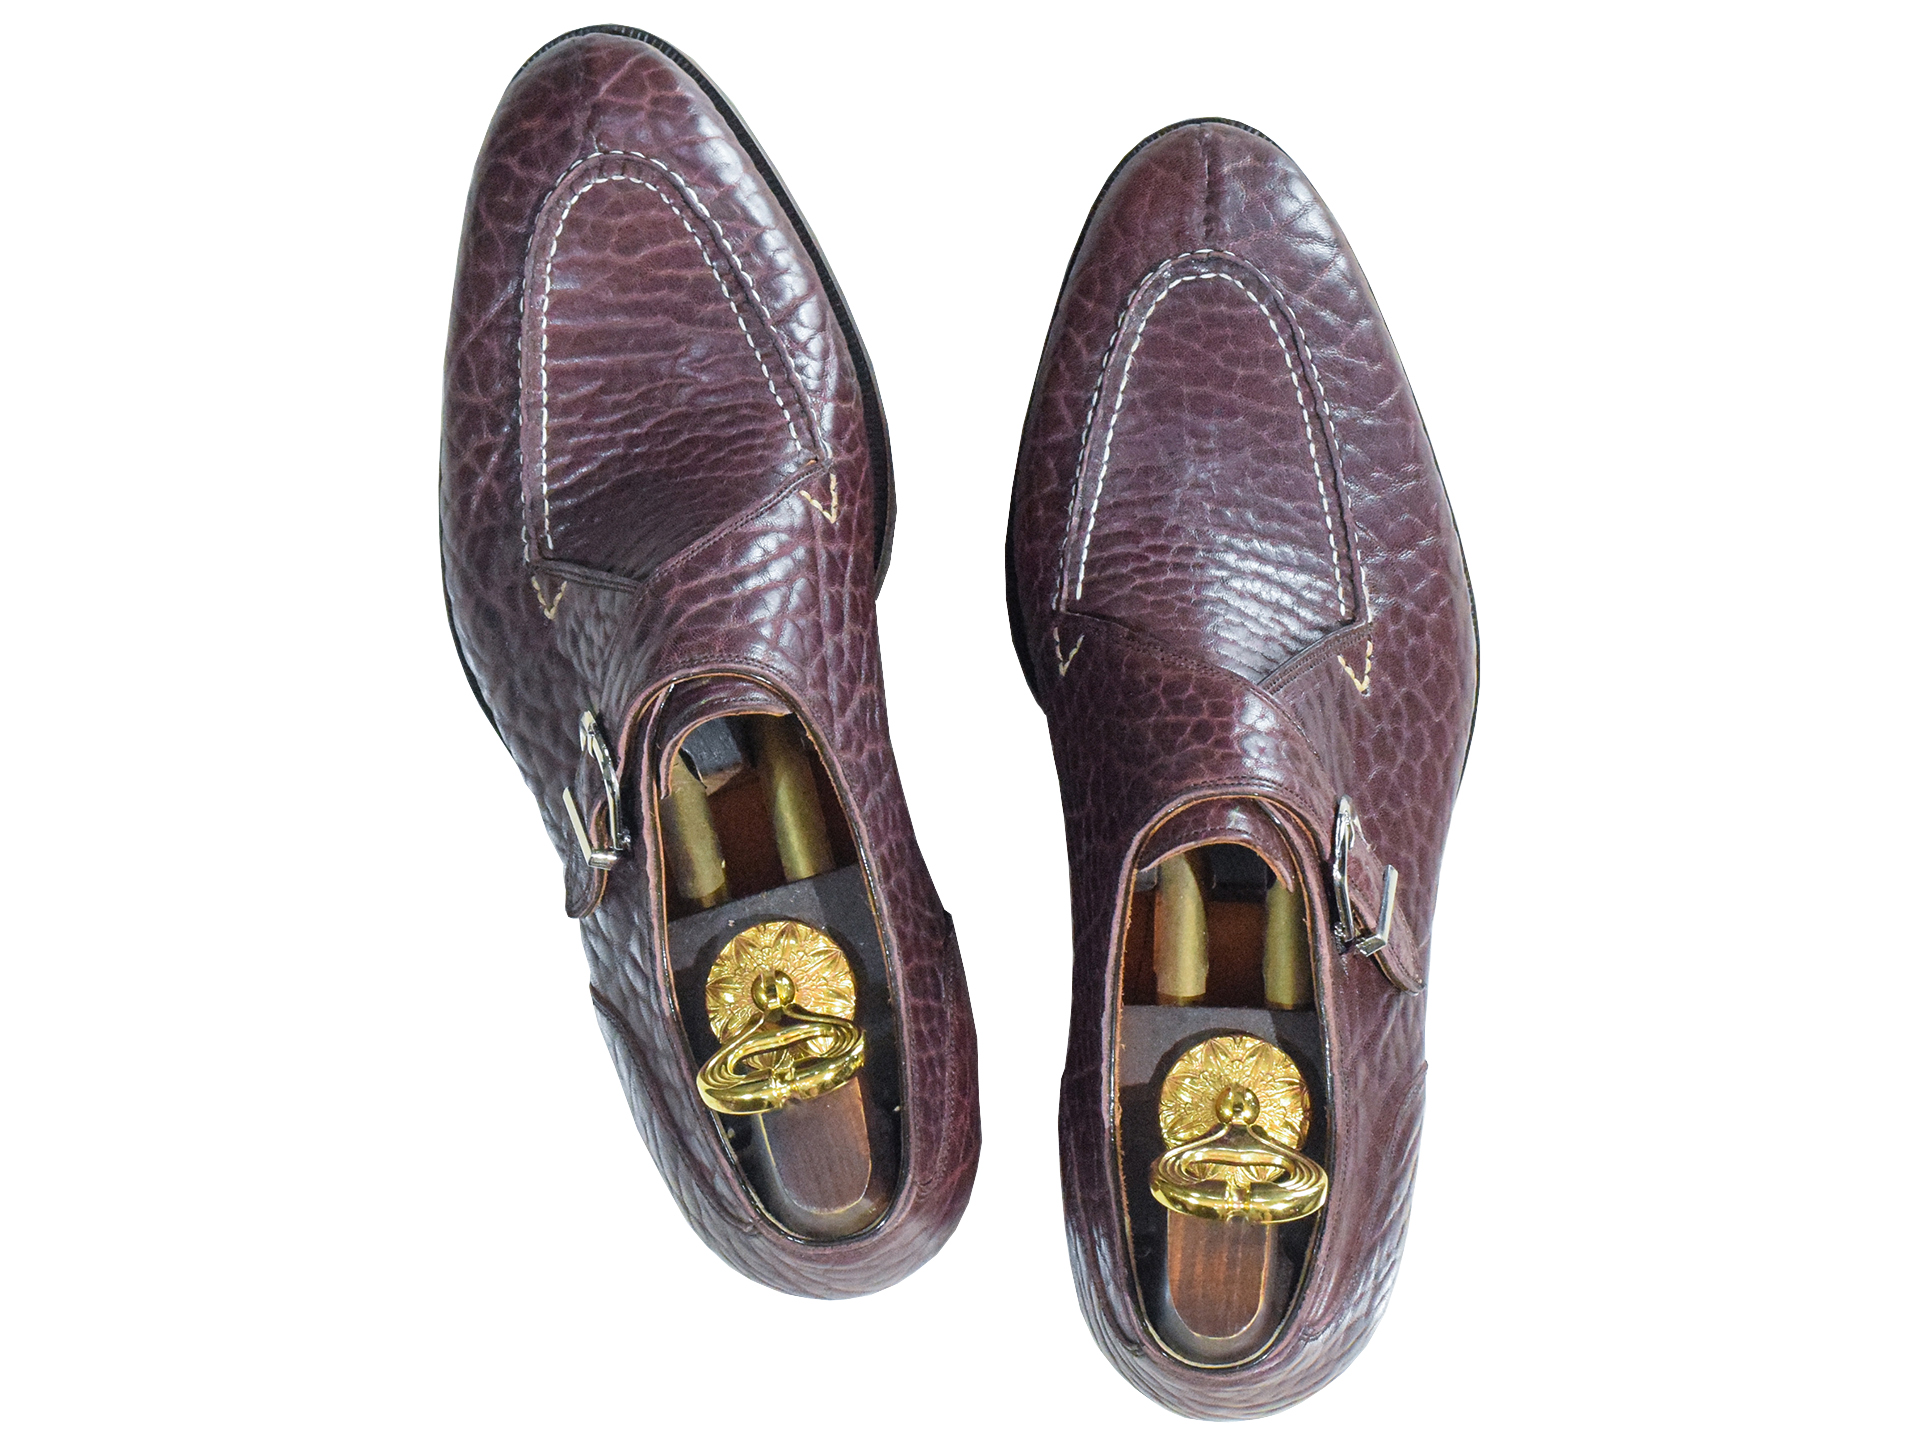 MTO single monkstrap split toe shoes - Bison leather